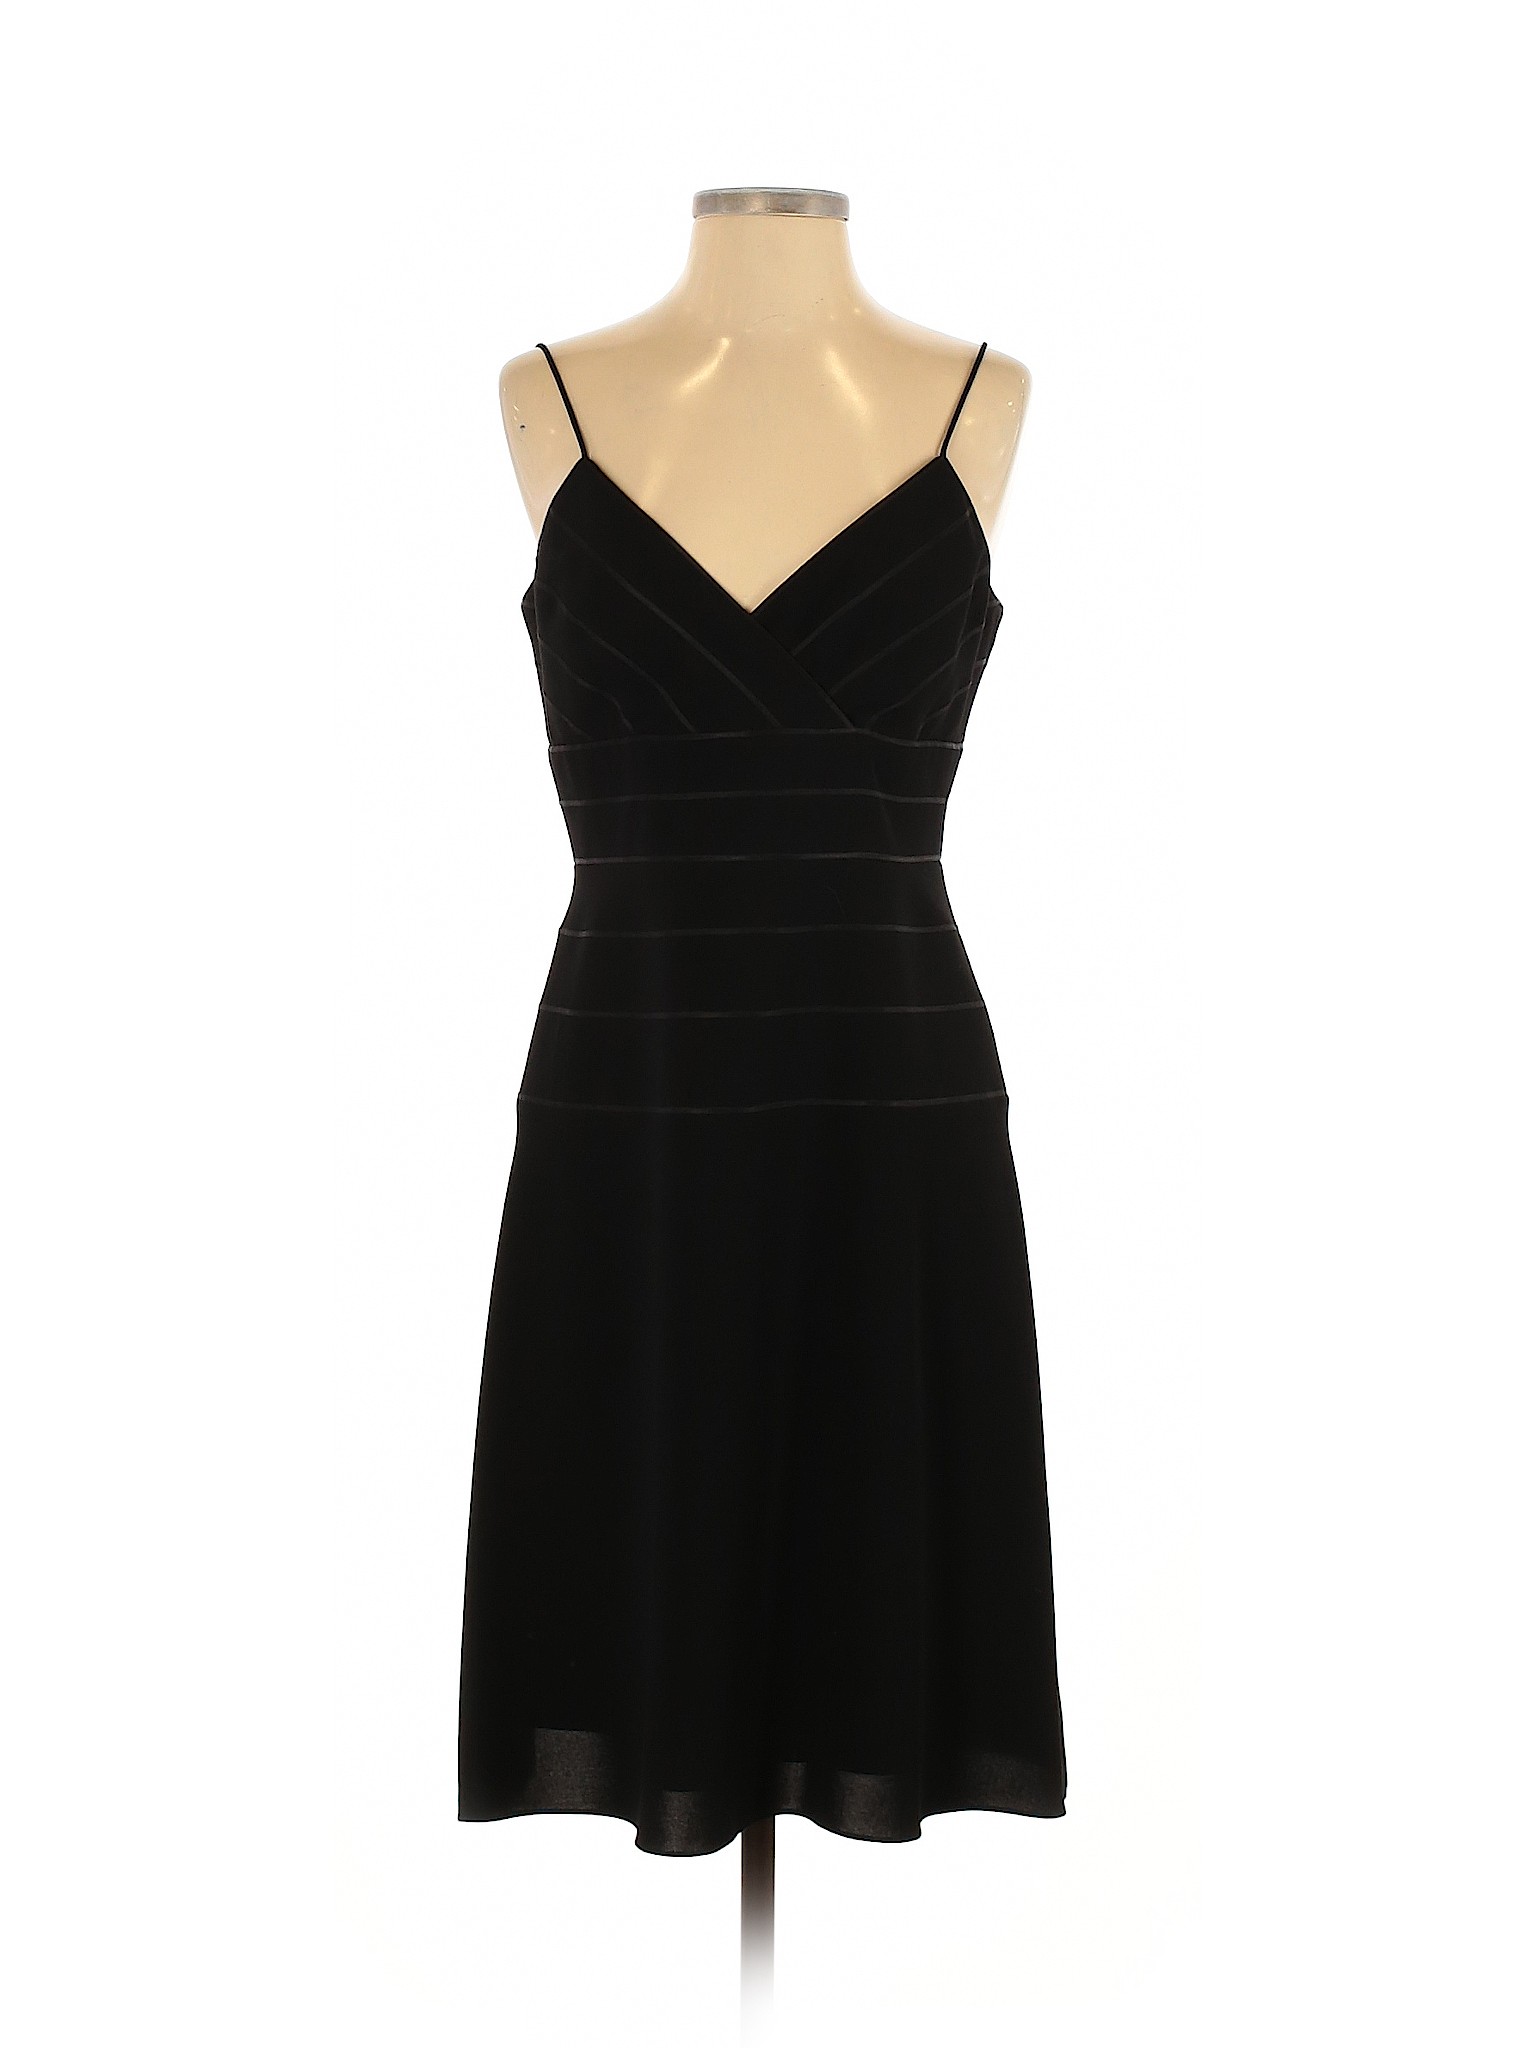 Jones New York Sport Women Black Cocktail Dress 4 | eBay